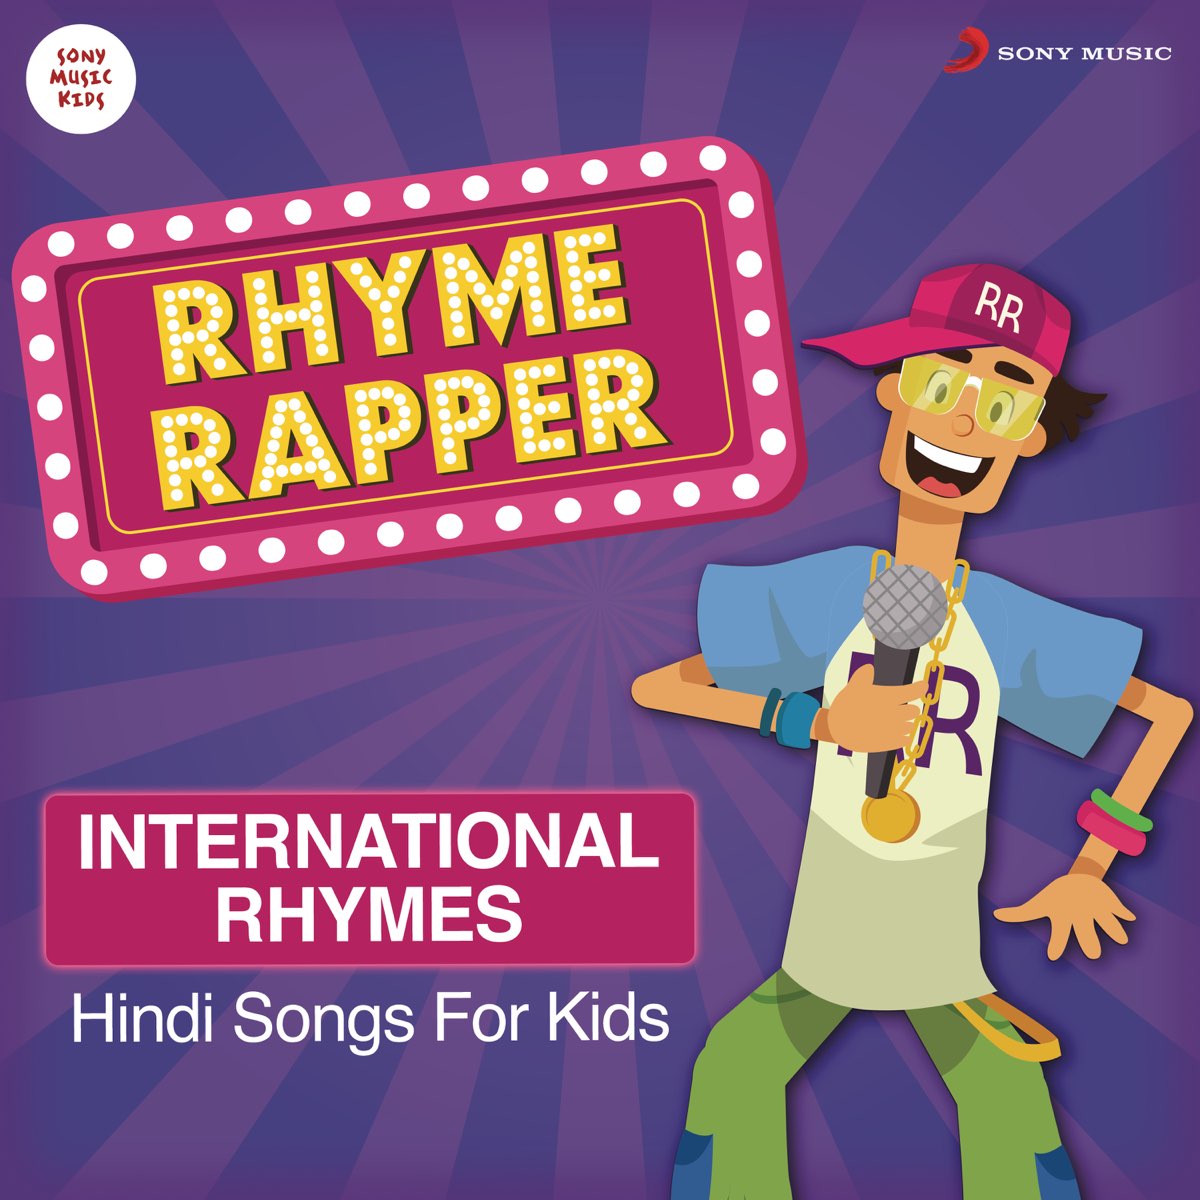 Rhyme Rapper: Hindi Songs for Kids (International) by Sayantan Bhattacharya  on Apple Music